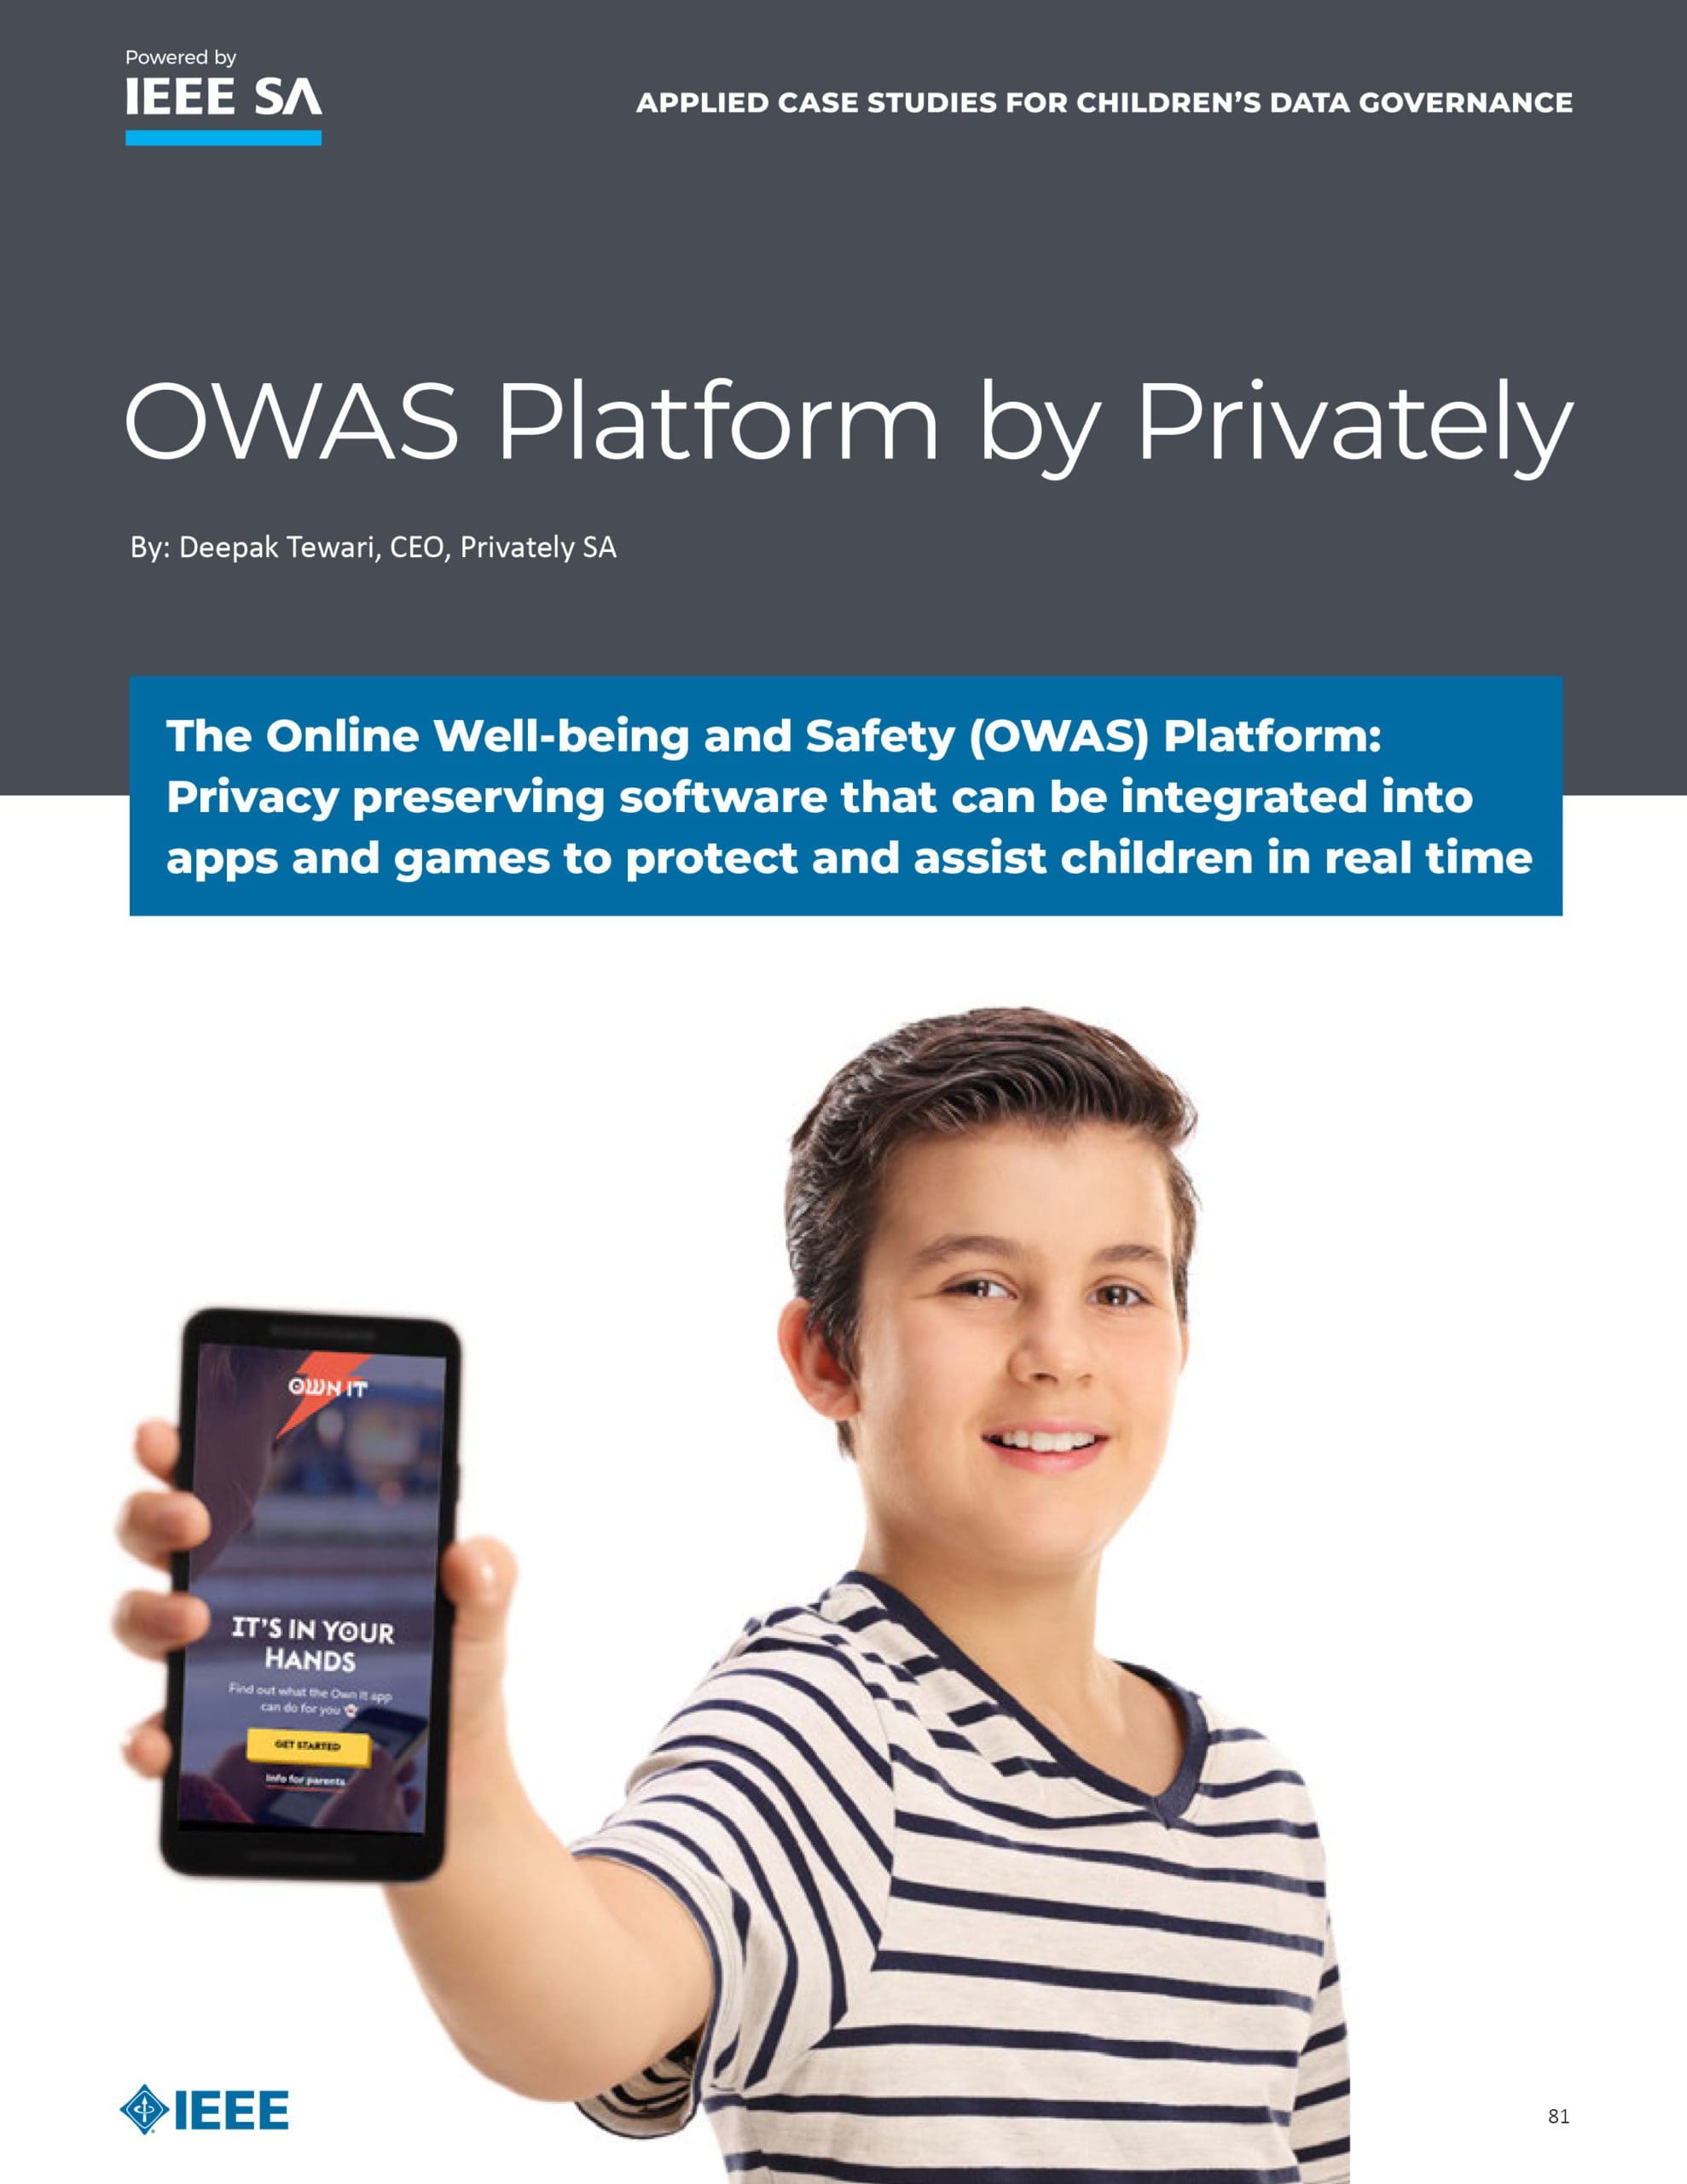 OWAS Platform by Privately